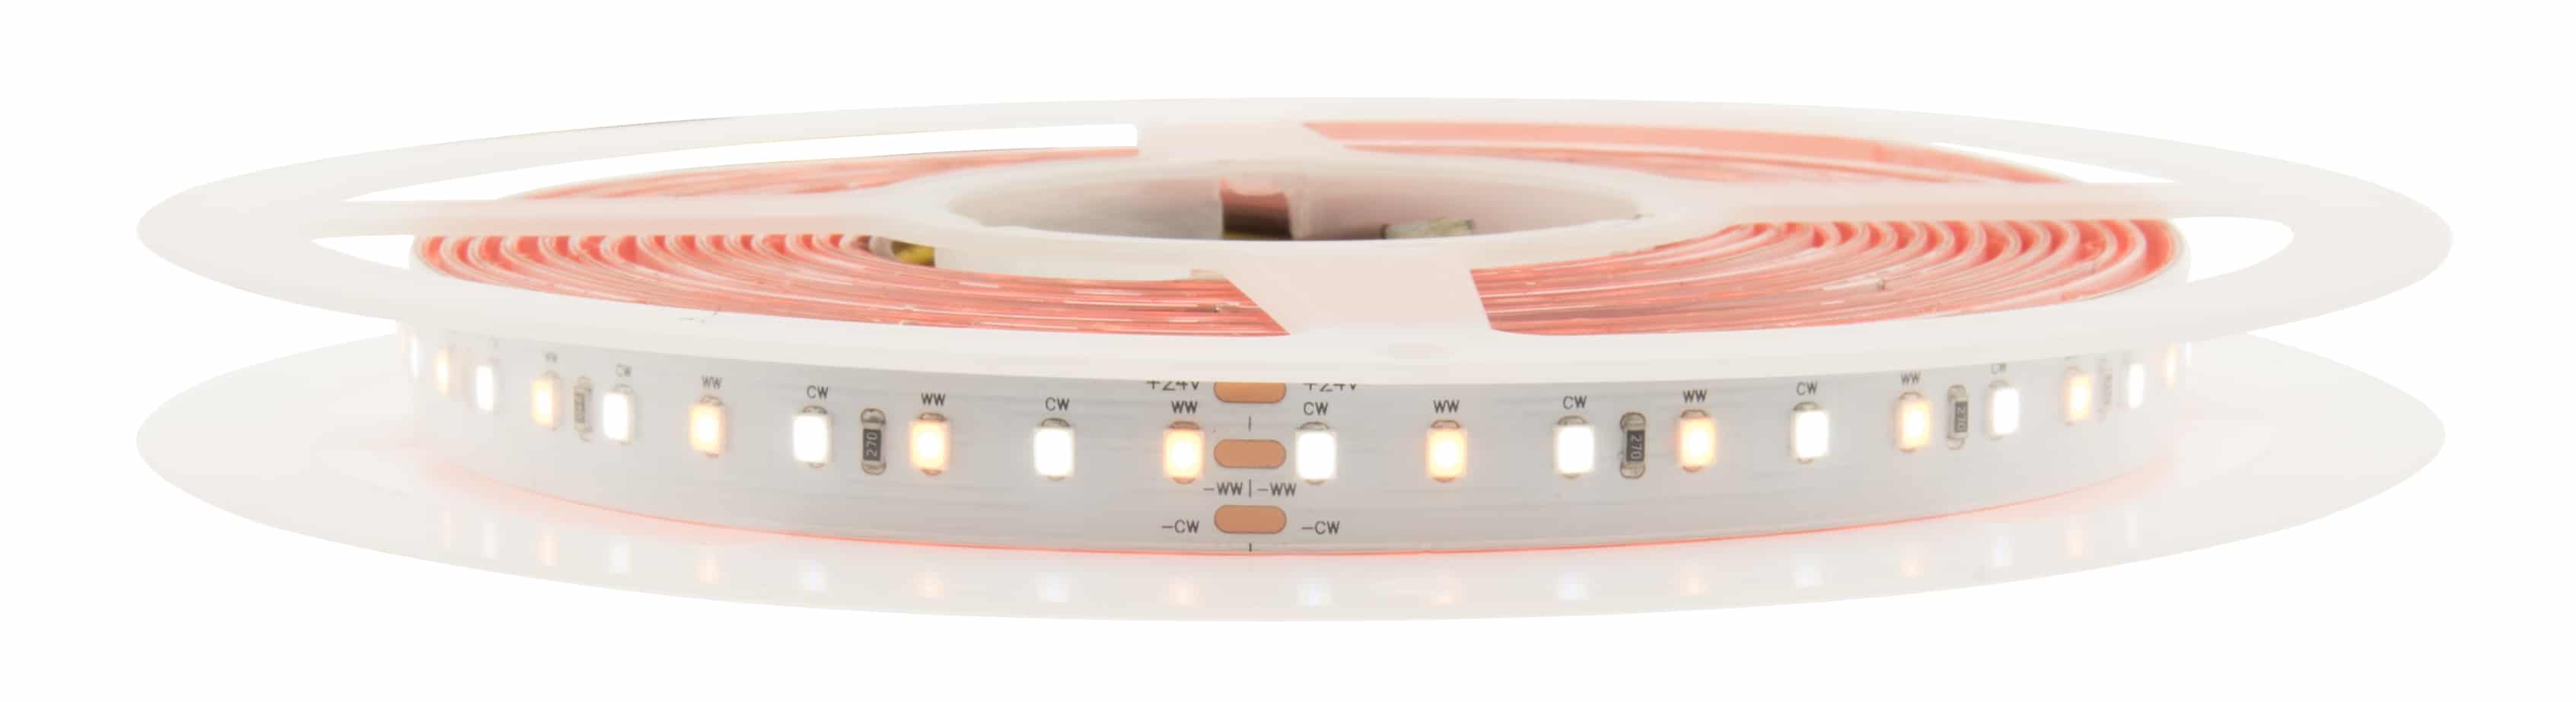 LED Flexstrip 115 AW (Ambiente White) - IP44 - Indoor | CRI/RA 90+